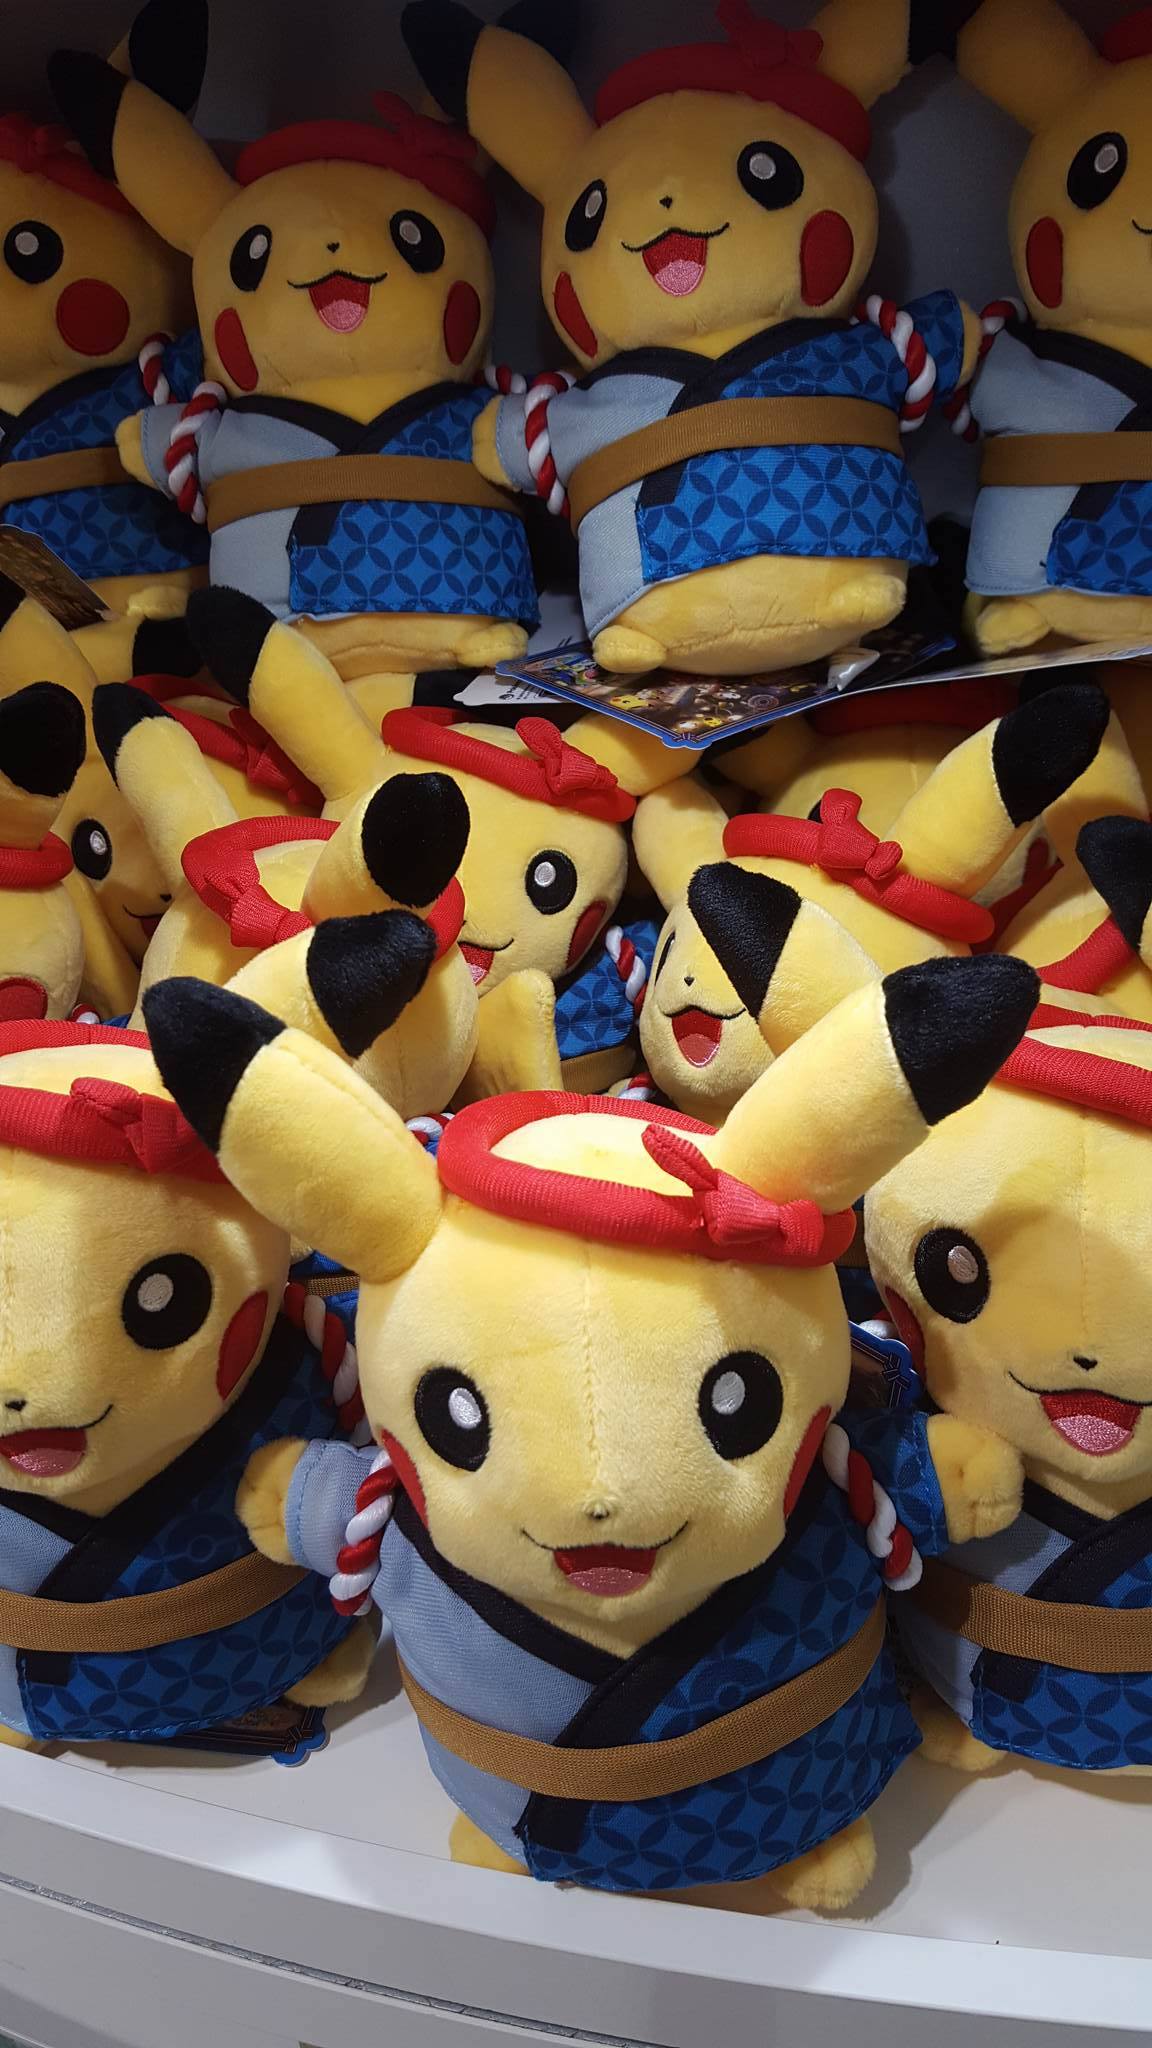 Matsuri (Festival) Pikachus! The summer festing season is upon us!